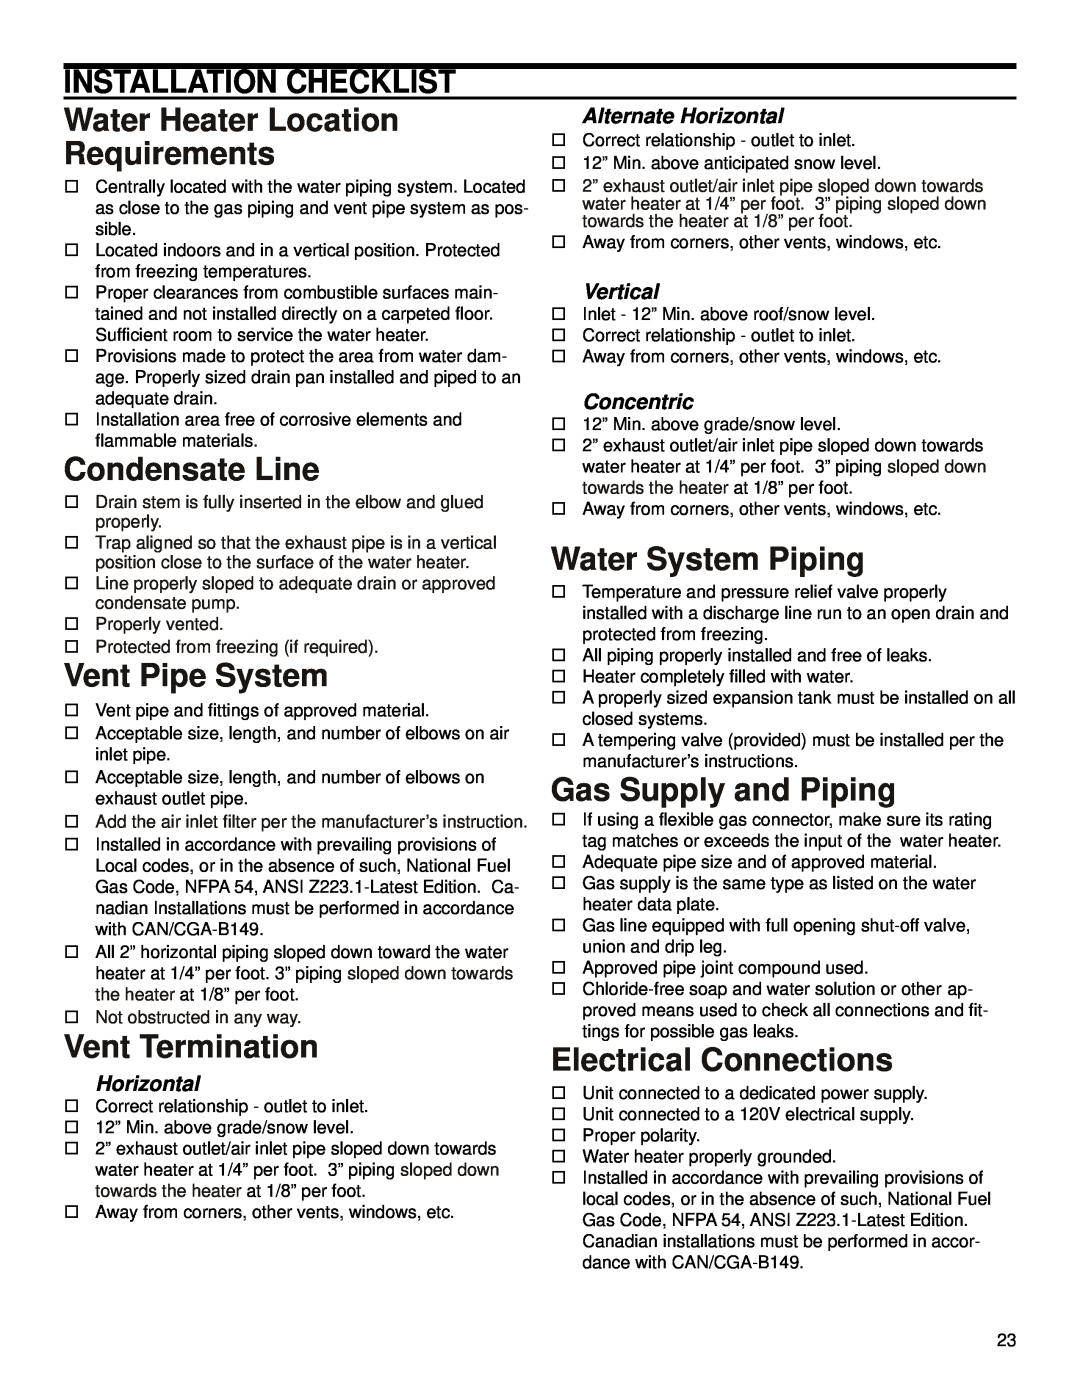 American International PR 130-50 2NV or 2PV Installation Checklist, Water Heater Location, Requirements, Condensate Line 